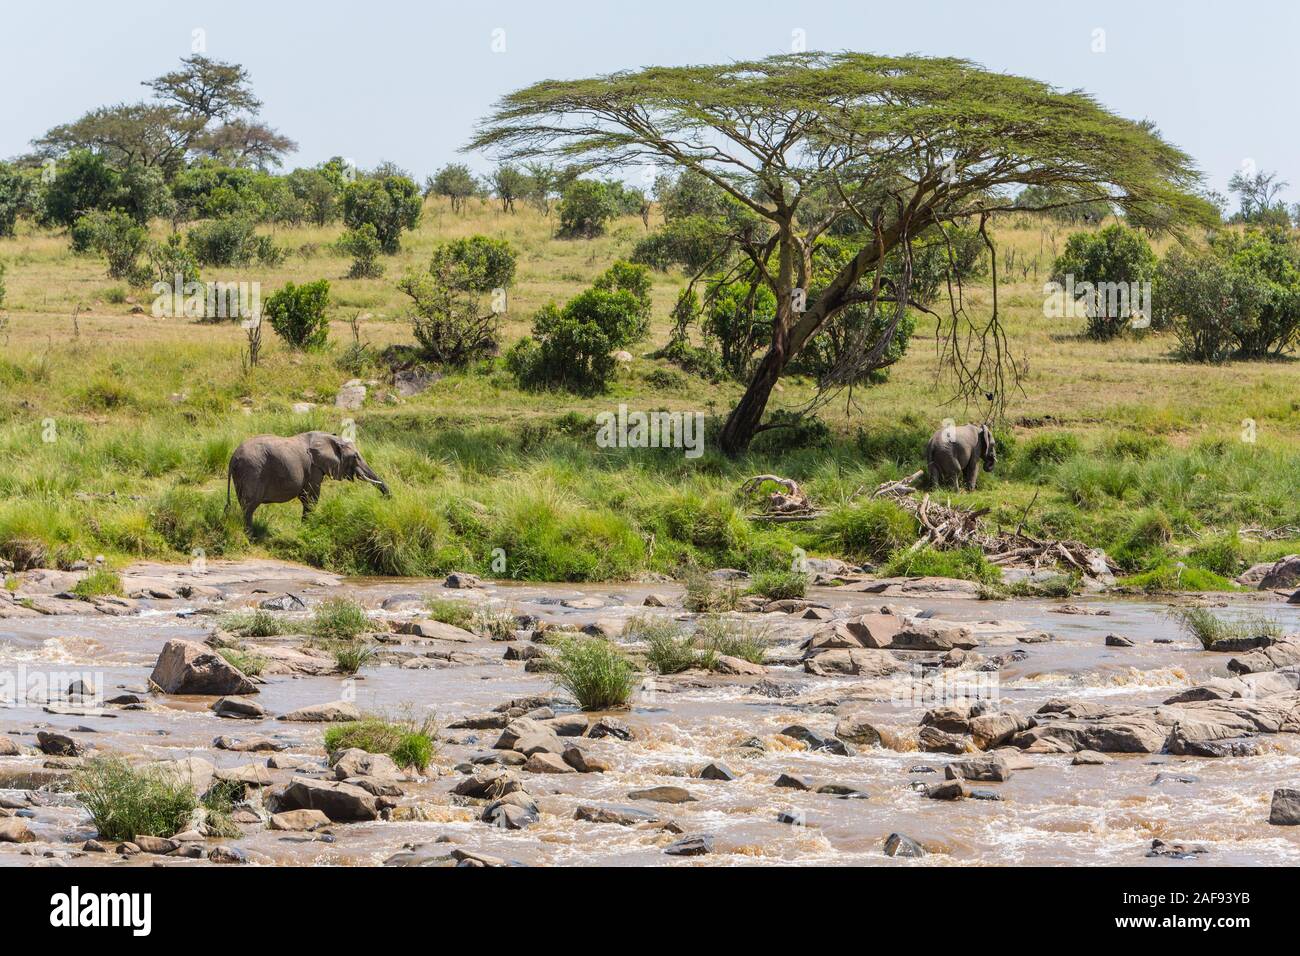 La Tanzanie. Serengeti. La navigation de l'éléphant sur les rives de la rivière Mara. Banque D'Images